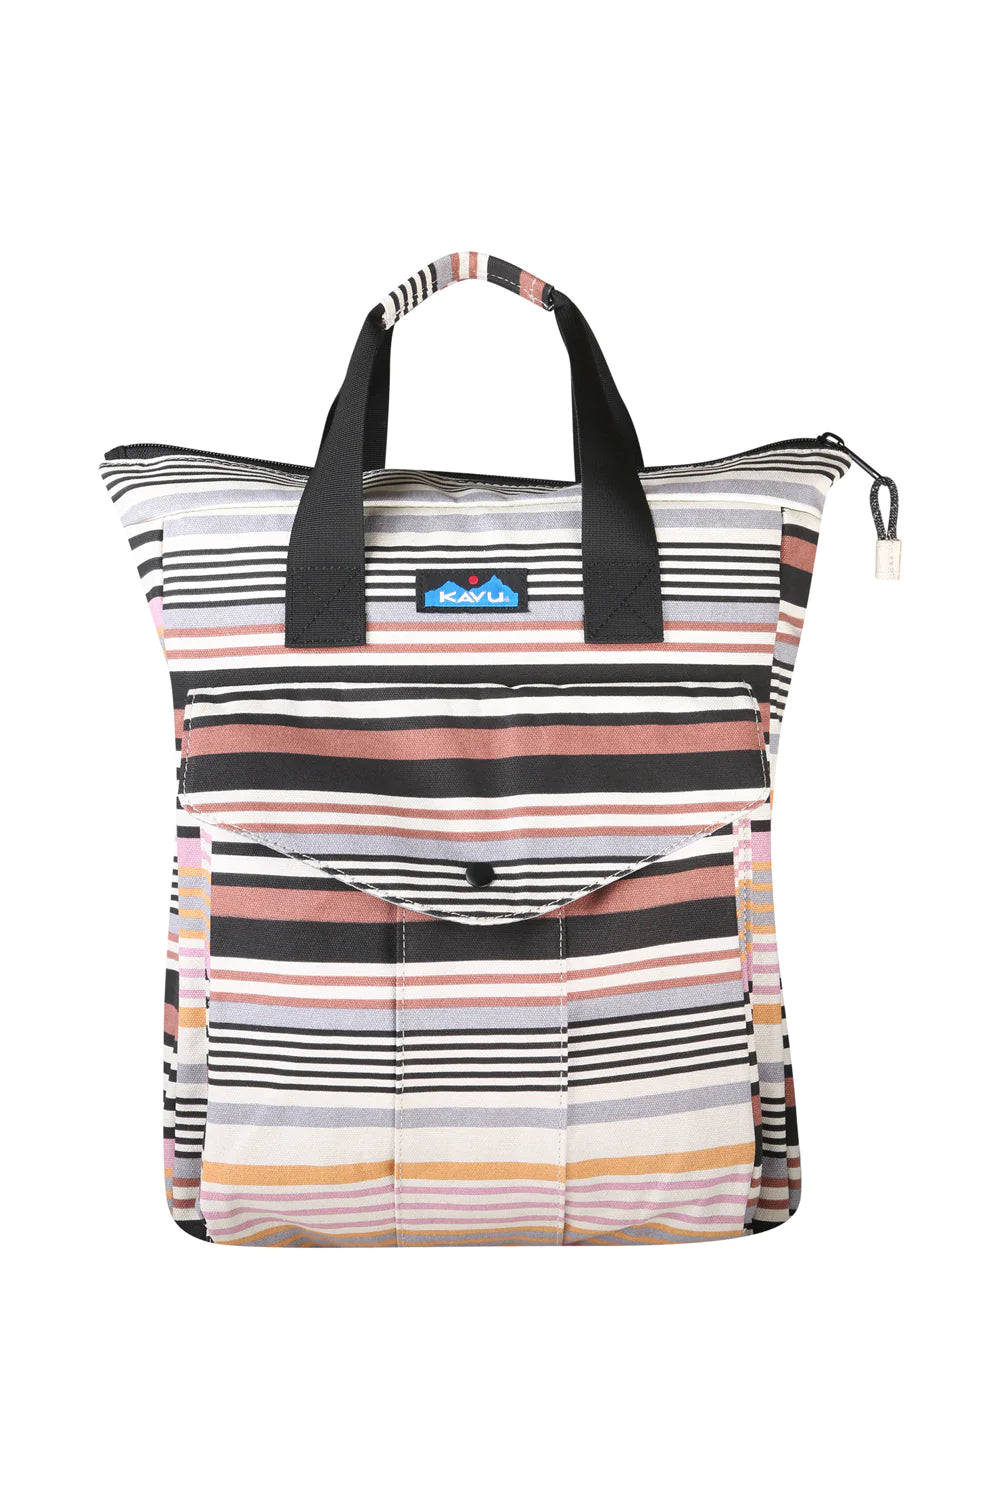 Kavu - Backpack/Bags Buckroe Springtime Stripe